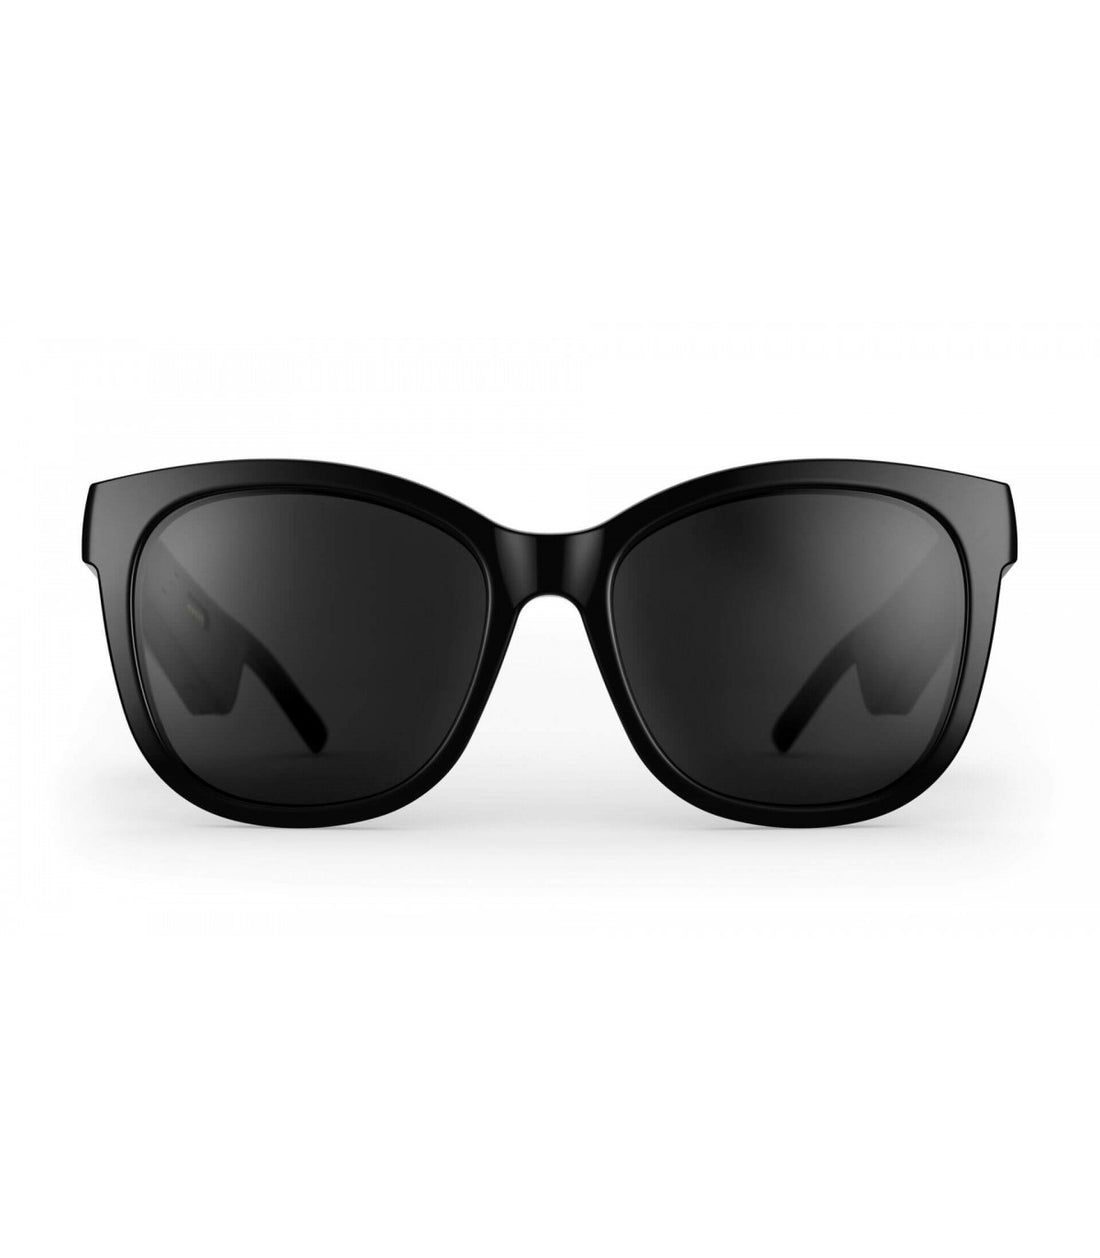 Sunglasses Bose Frames Soprano Gafas De Sol Con Audio